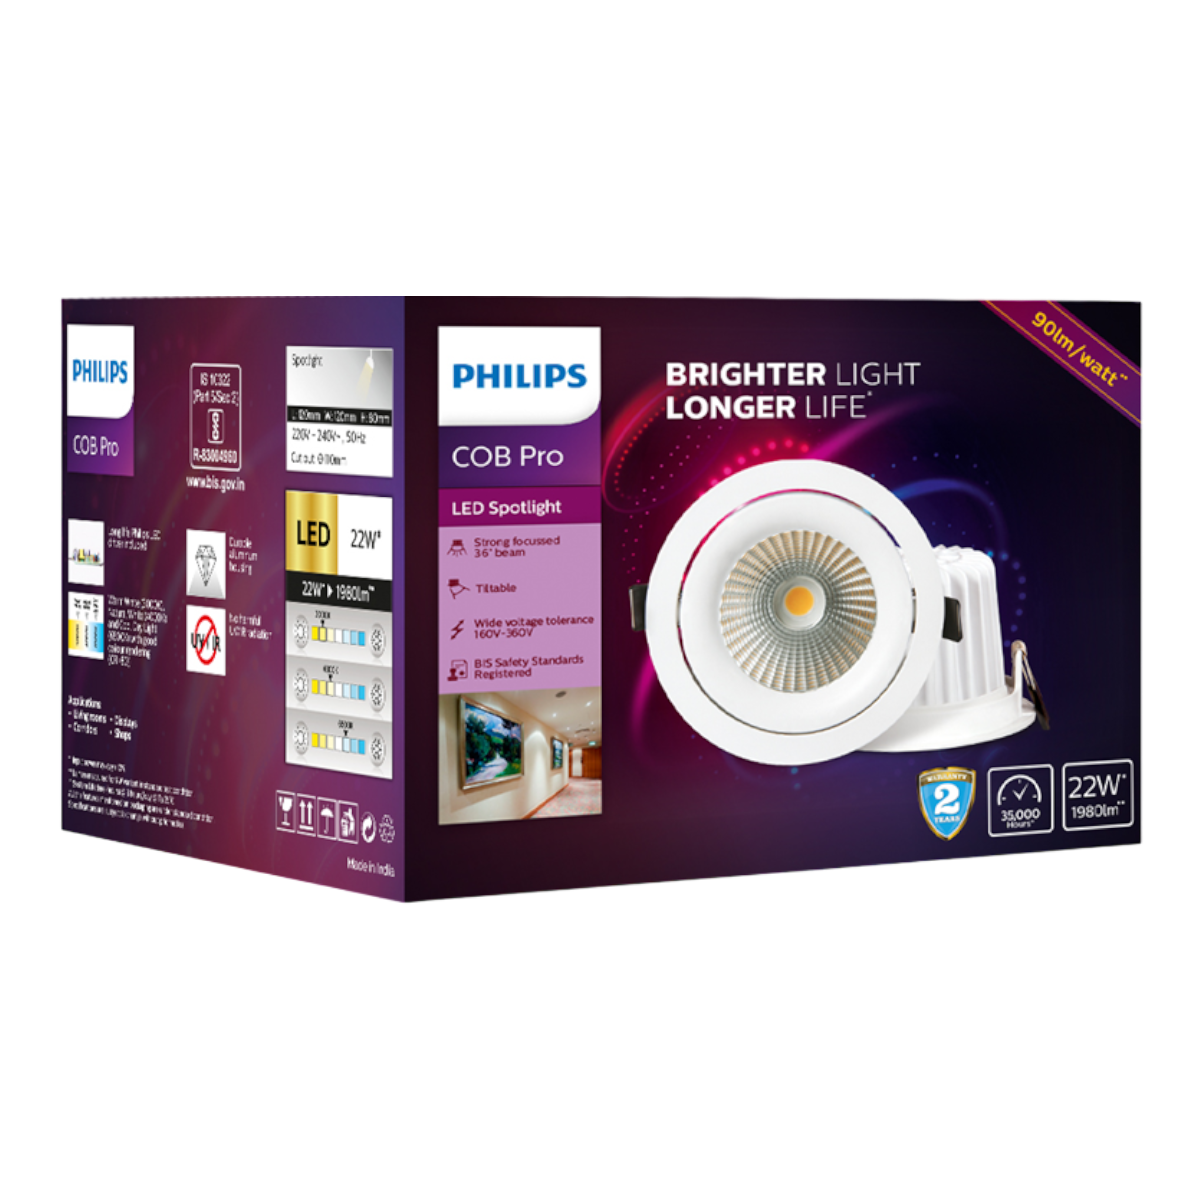 Buy Philips LED COB Pro | Online – Store Philips lighting lighting Philips